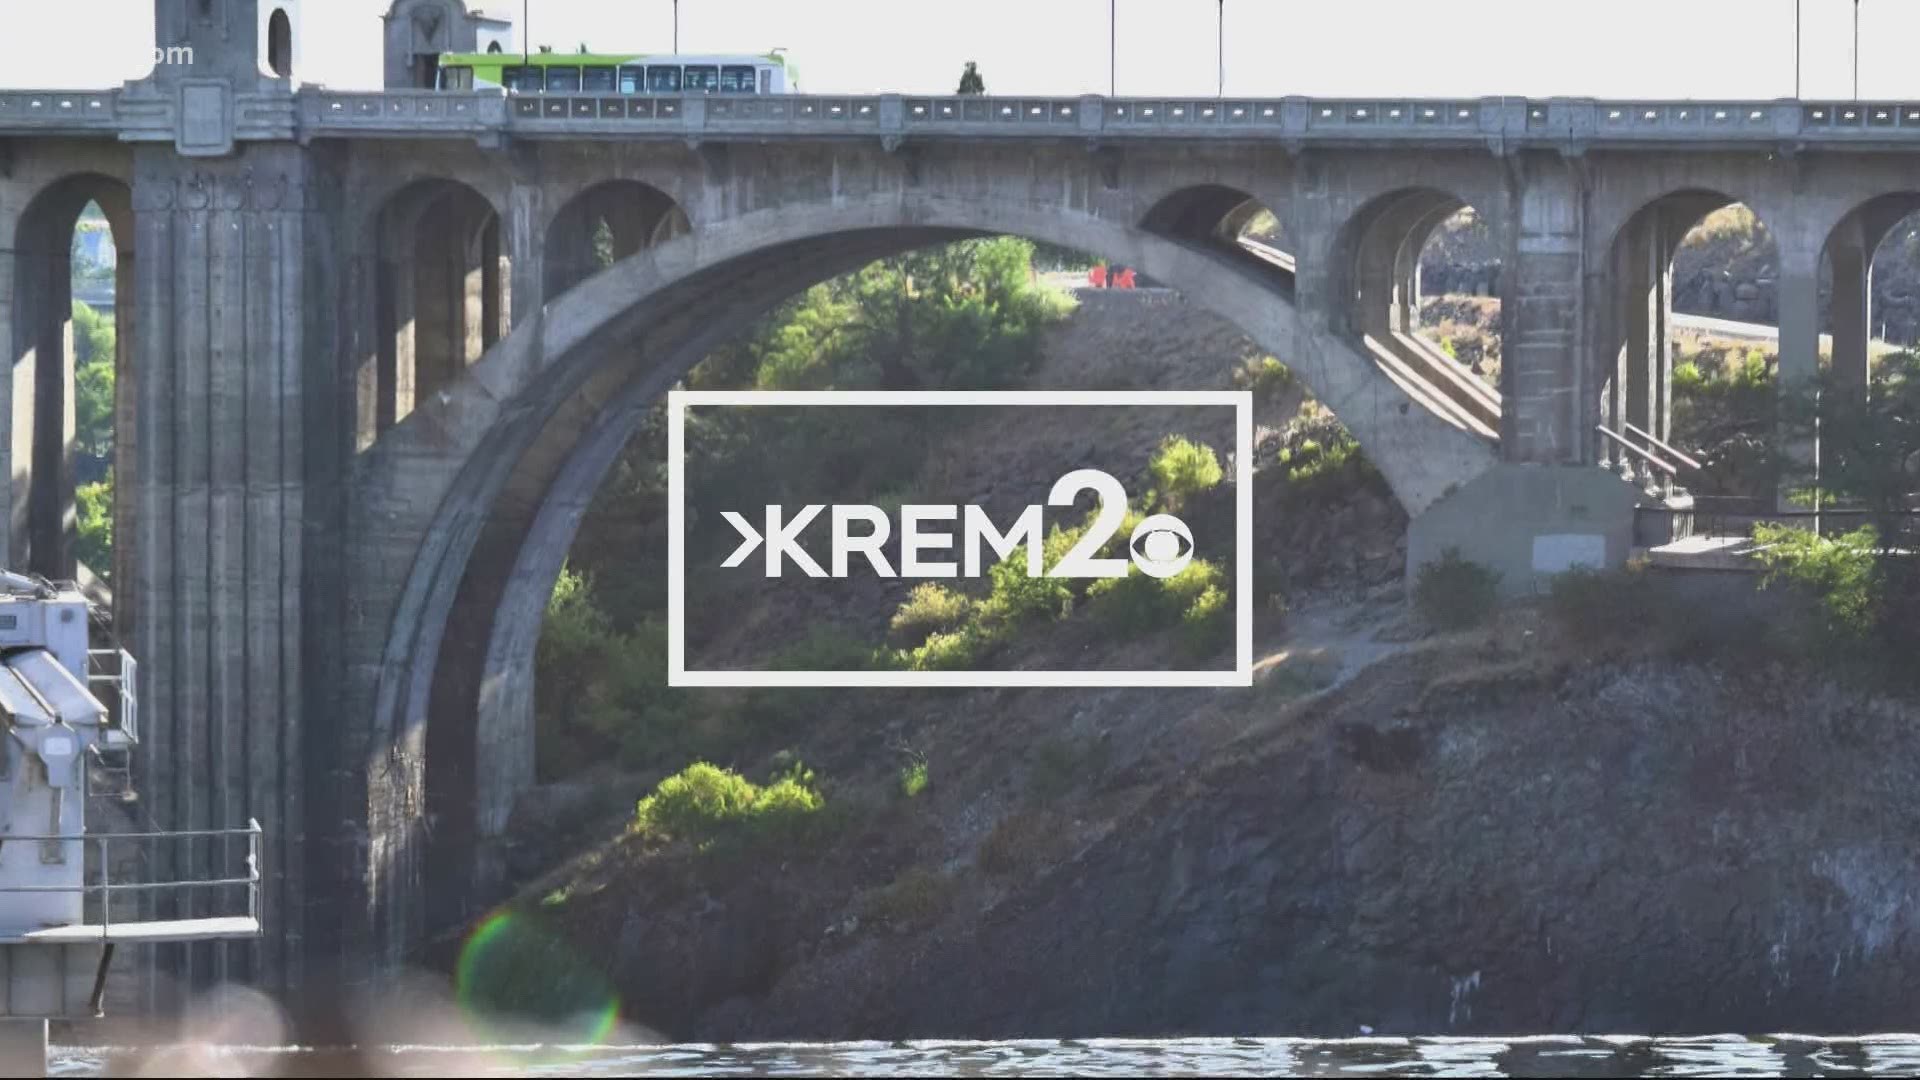 KREM 2 News at 5 top stories for Spokane and North Idaho on April 7, 2021